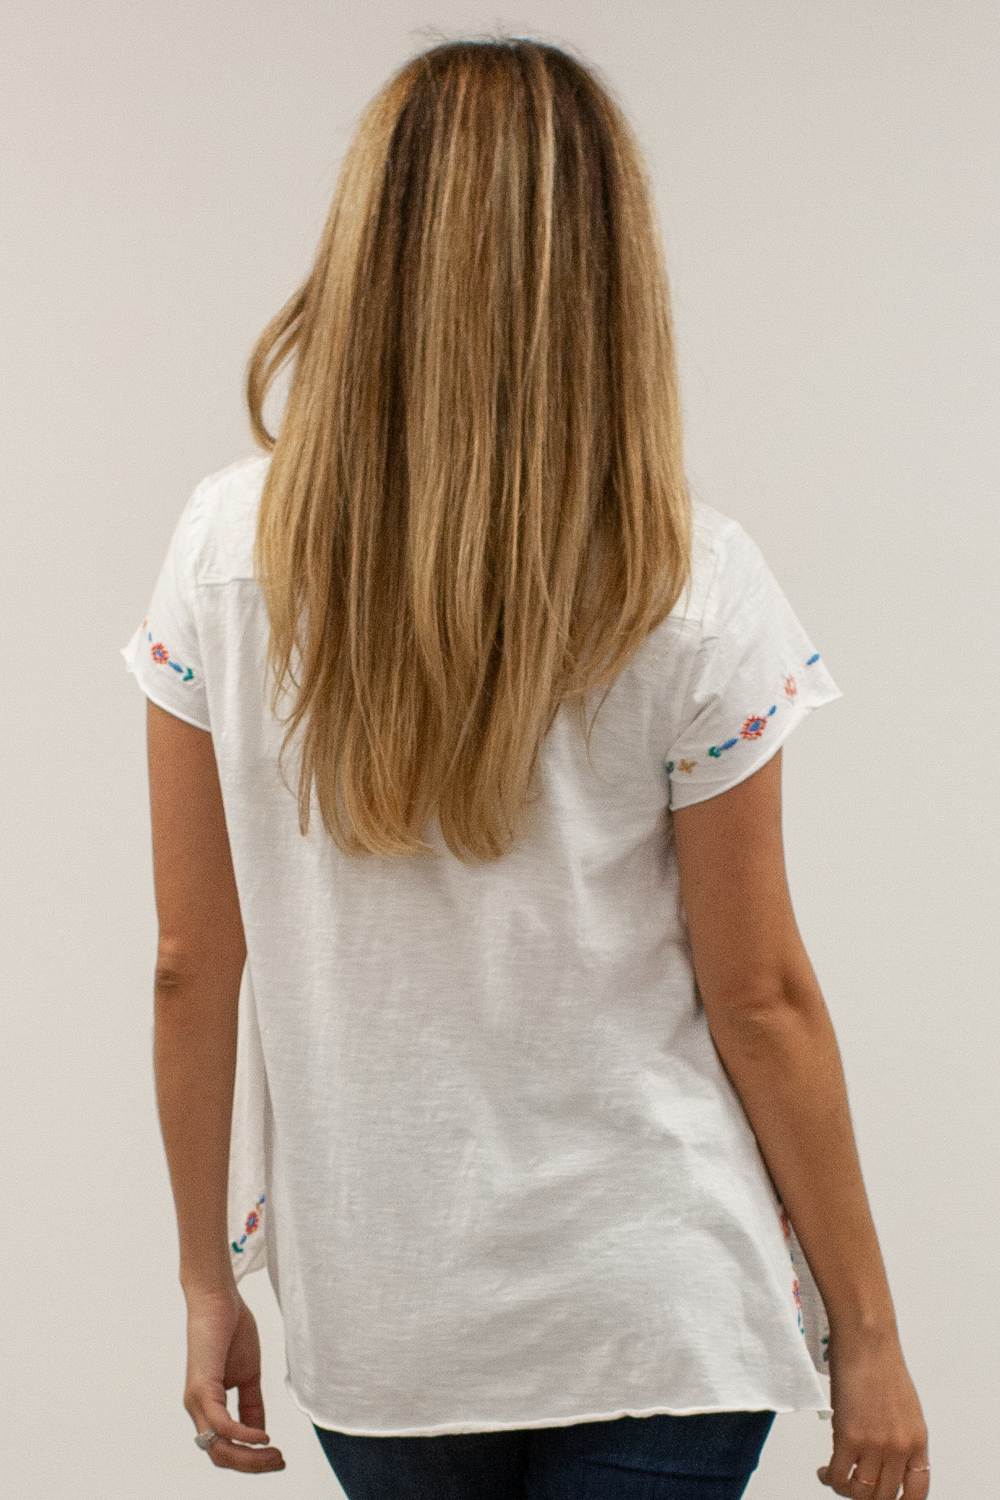 Caite Sadie t-shirt, embroidered short sleeve